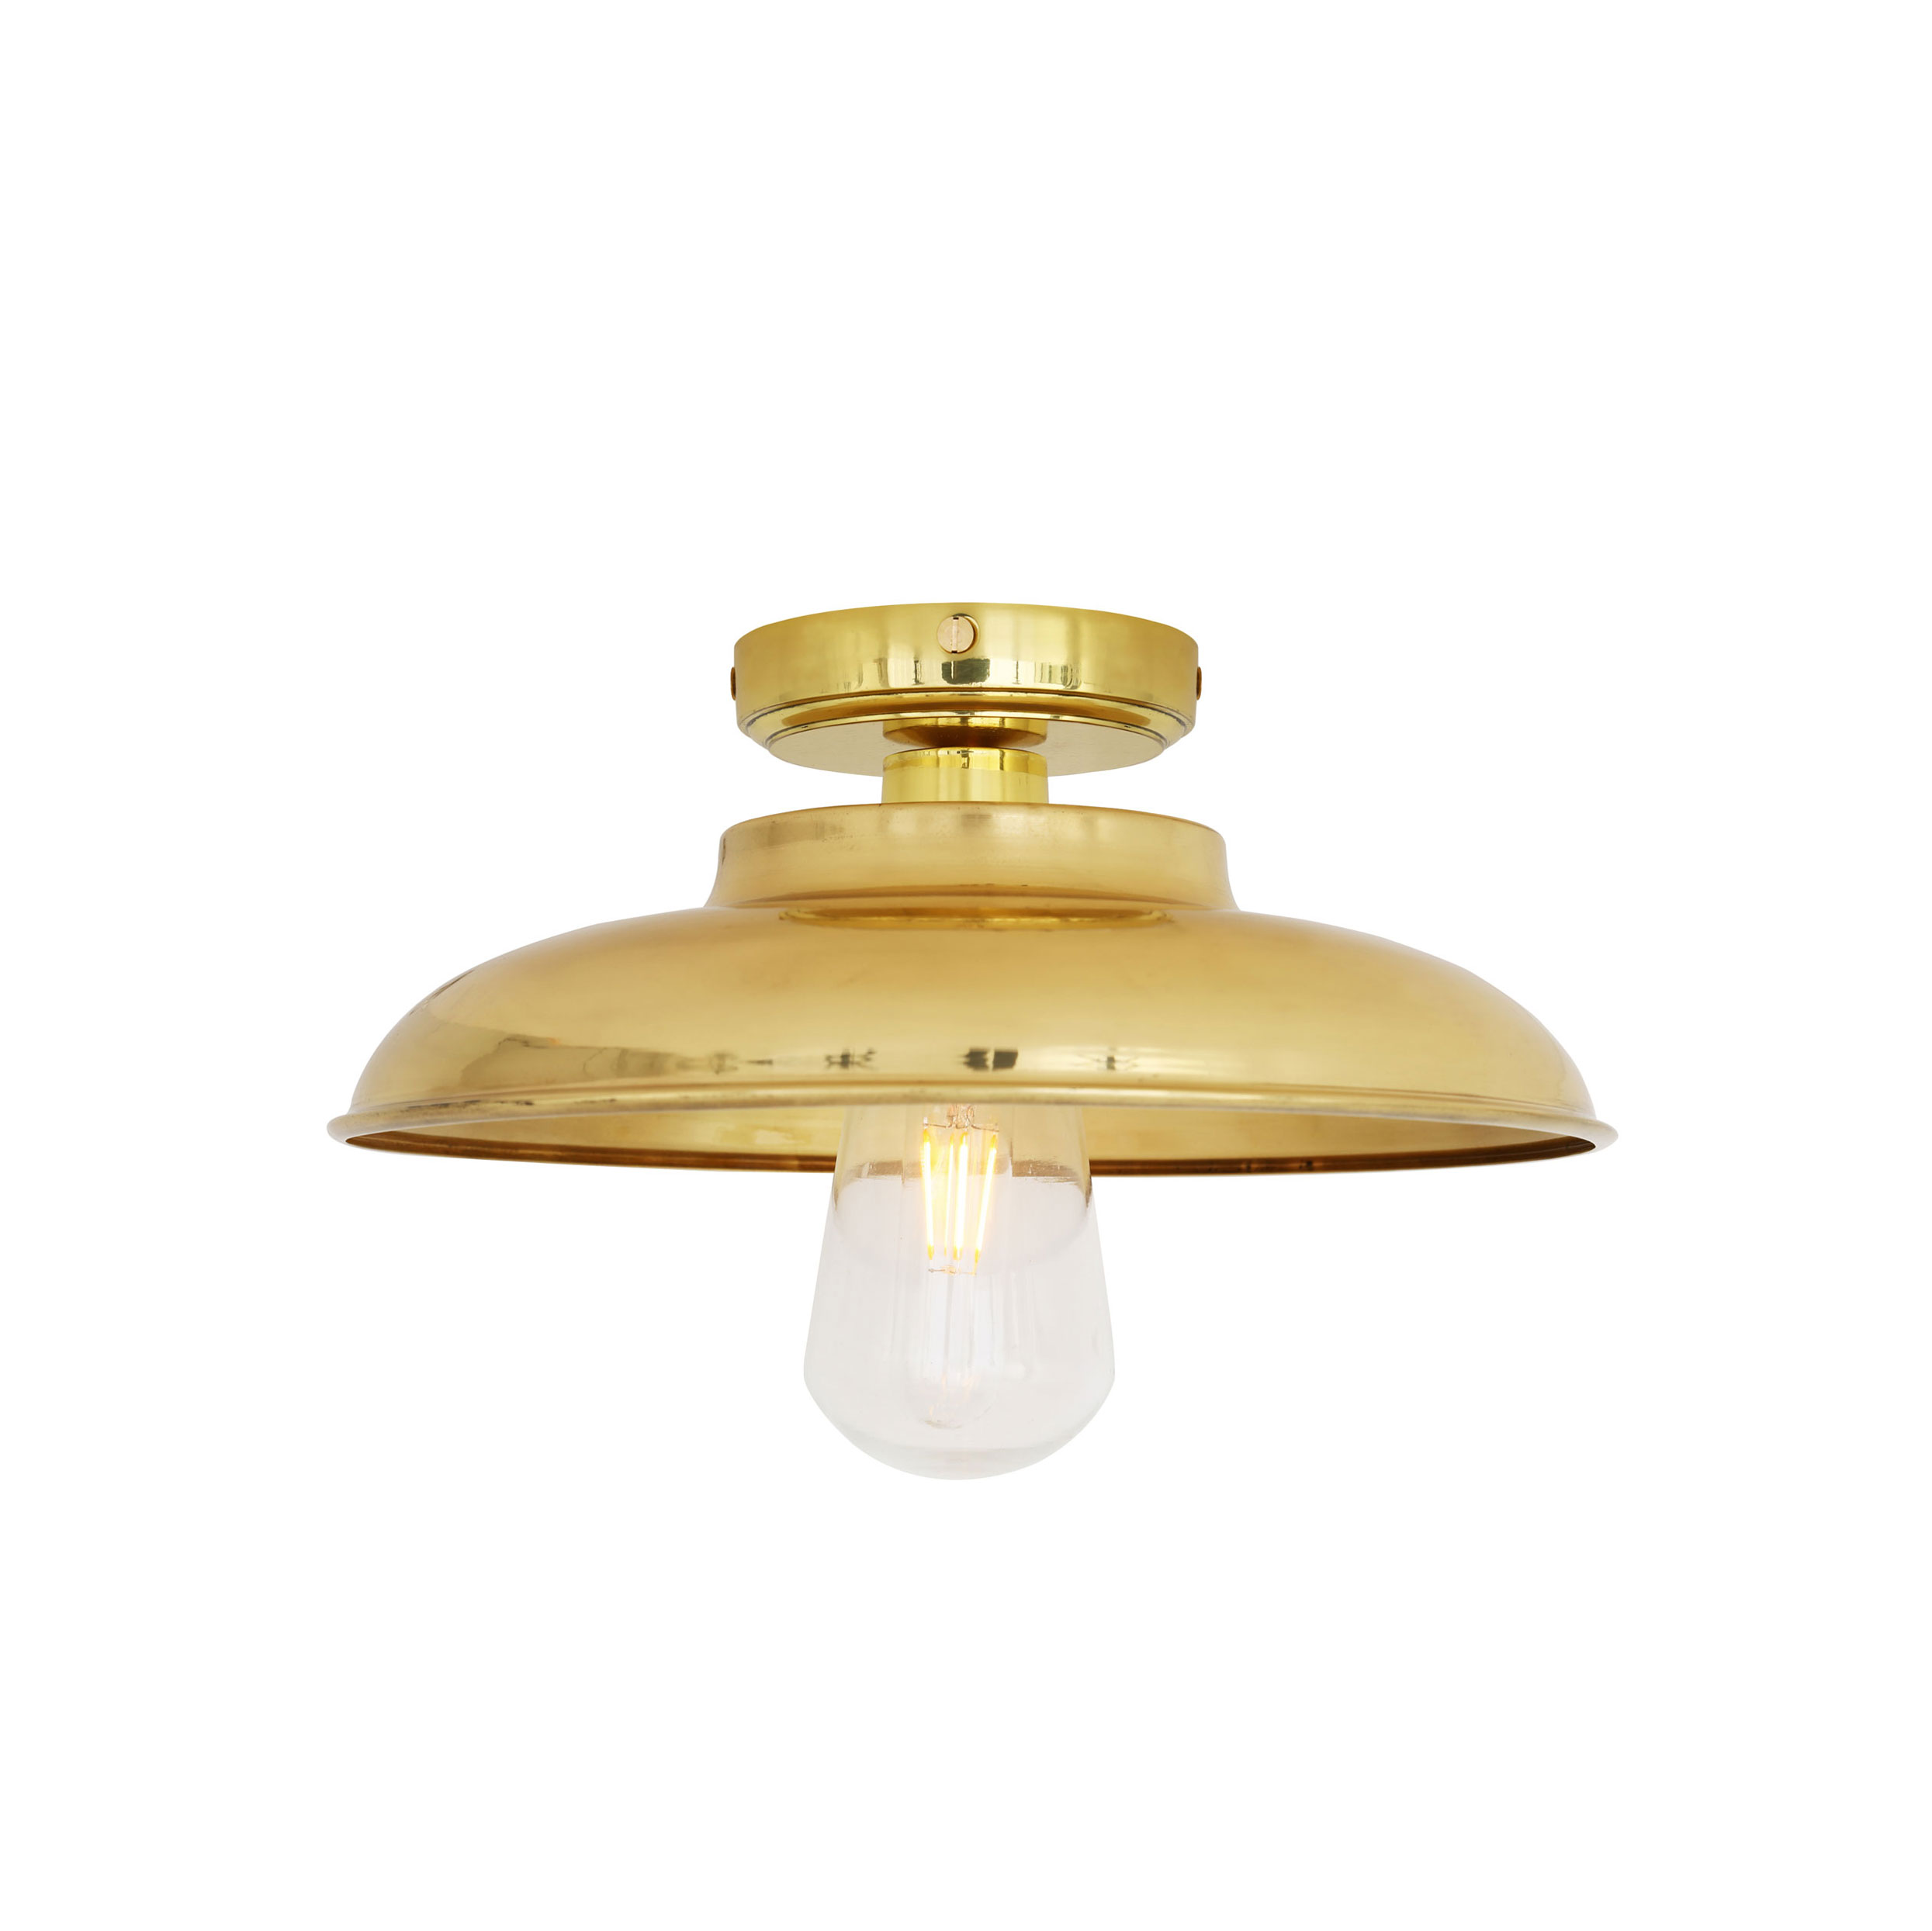 HYDRA | LED pendant lamp LED brass pendant lamp By Mullan Lighting